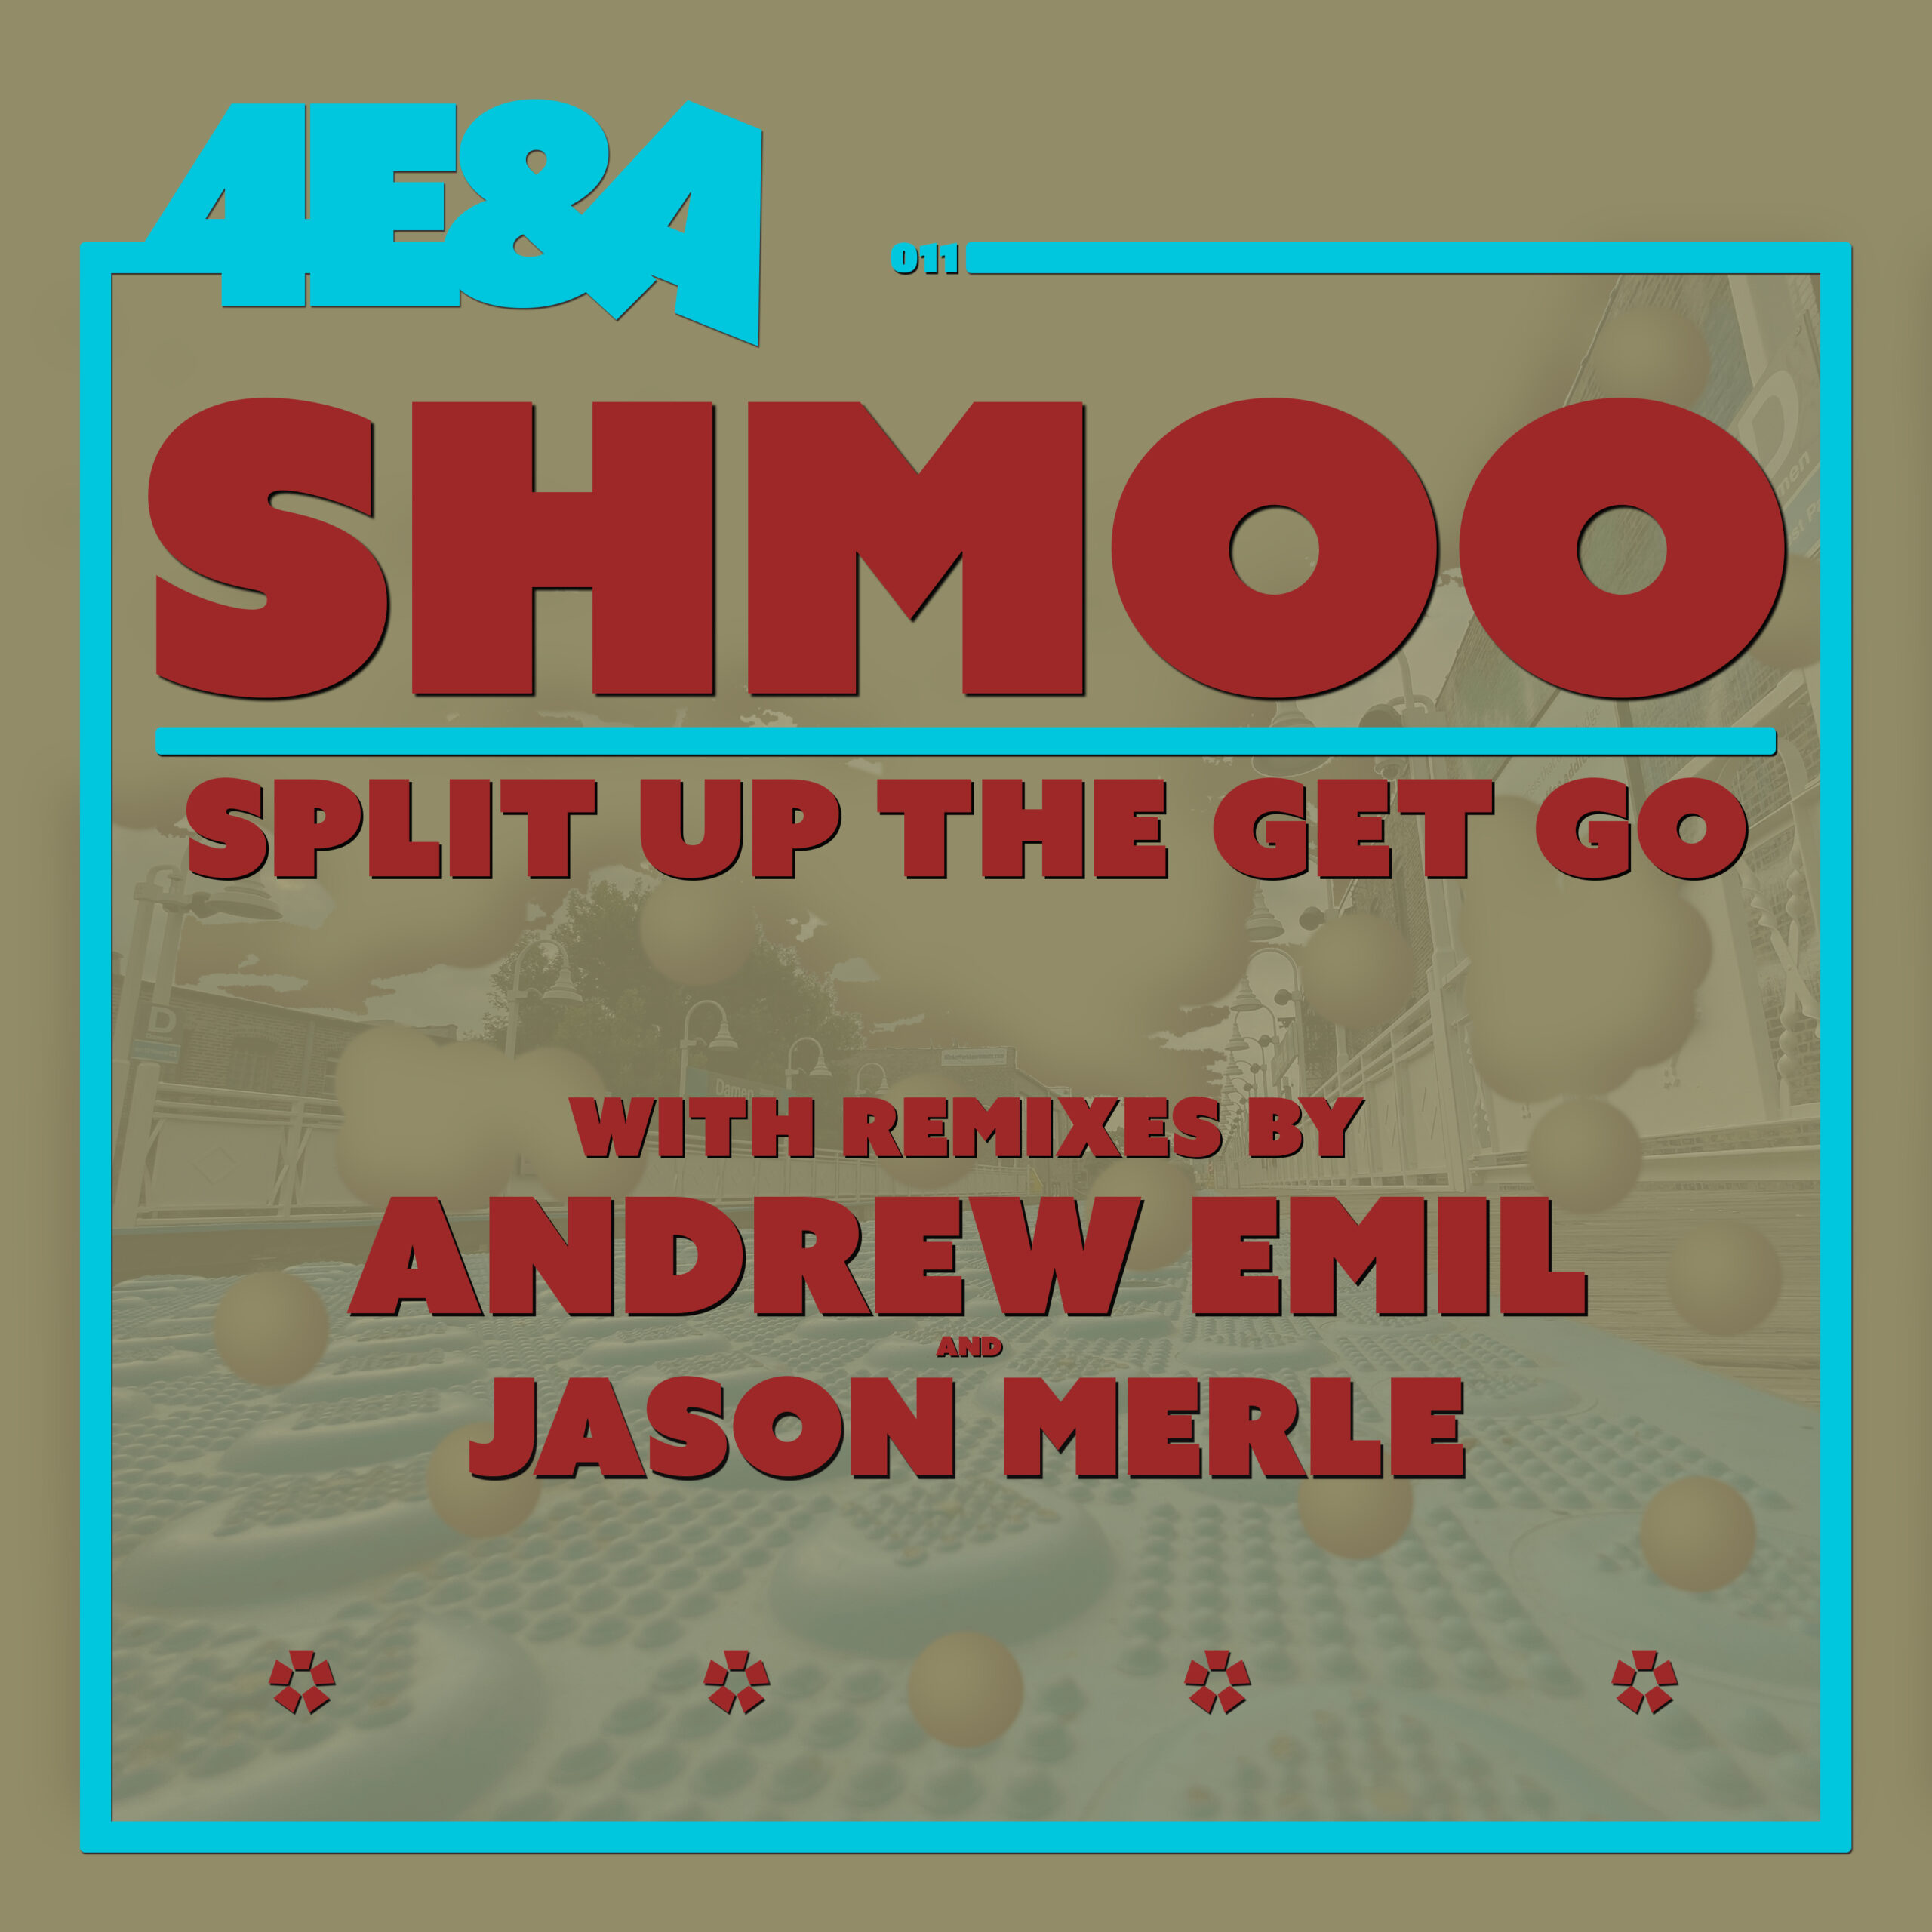 Split Up The Get Go (Andrew Emil Dreamix)